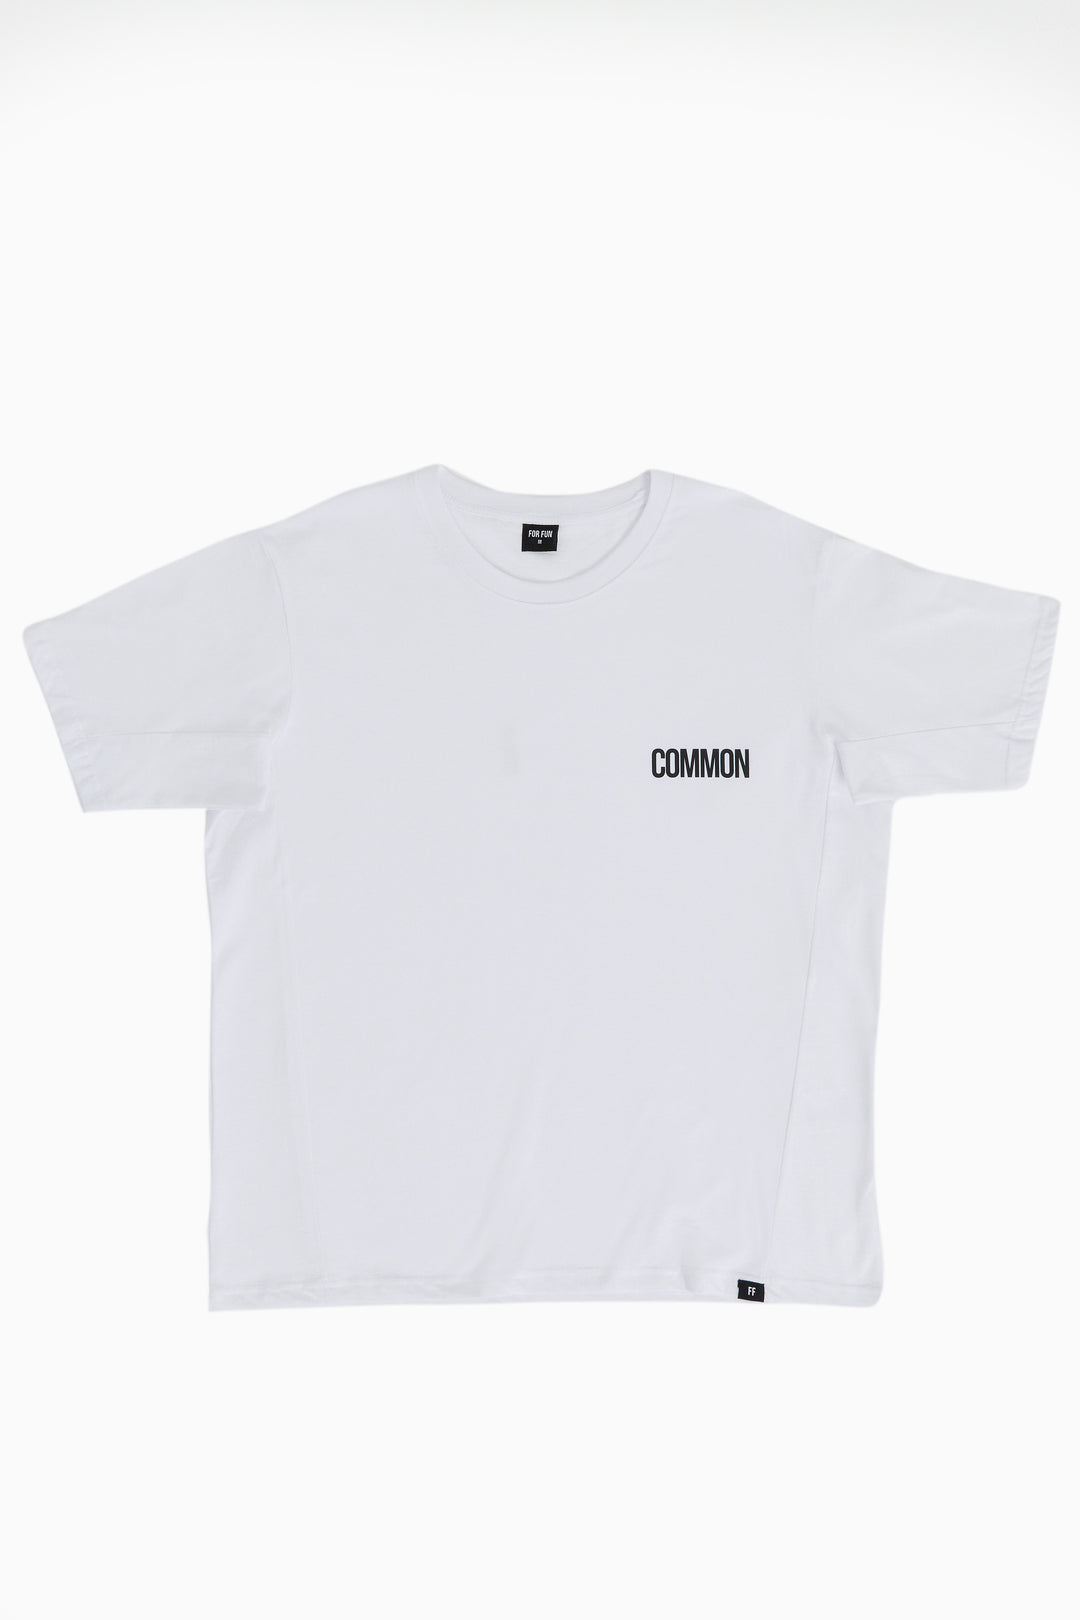 Common / Oversized T-shirt